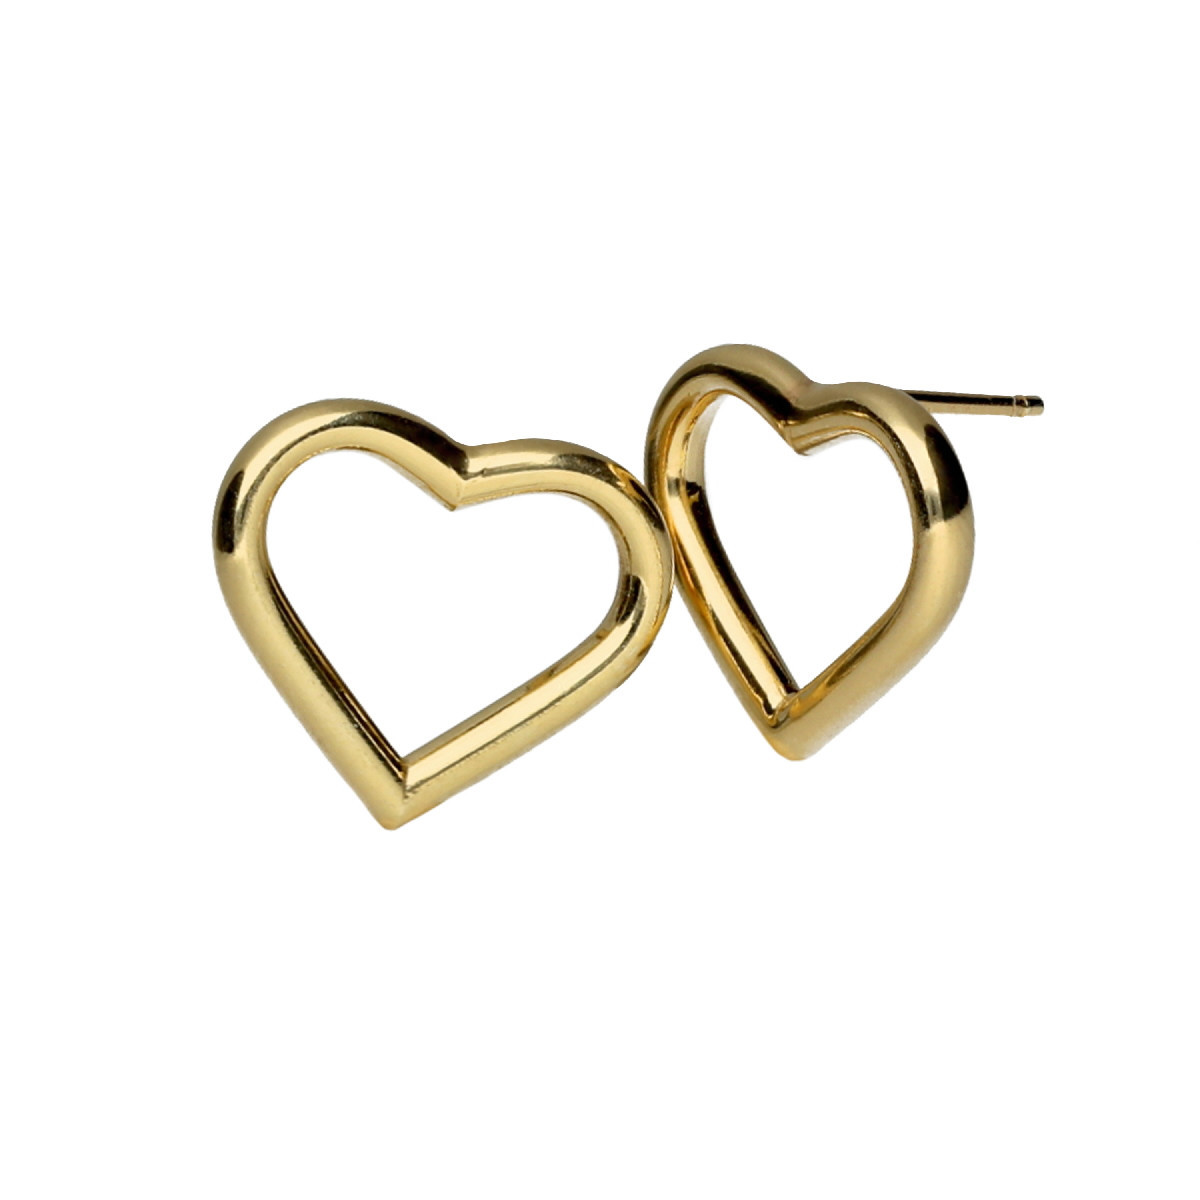 Well-loved gold-plated short earrings in heart shape